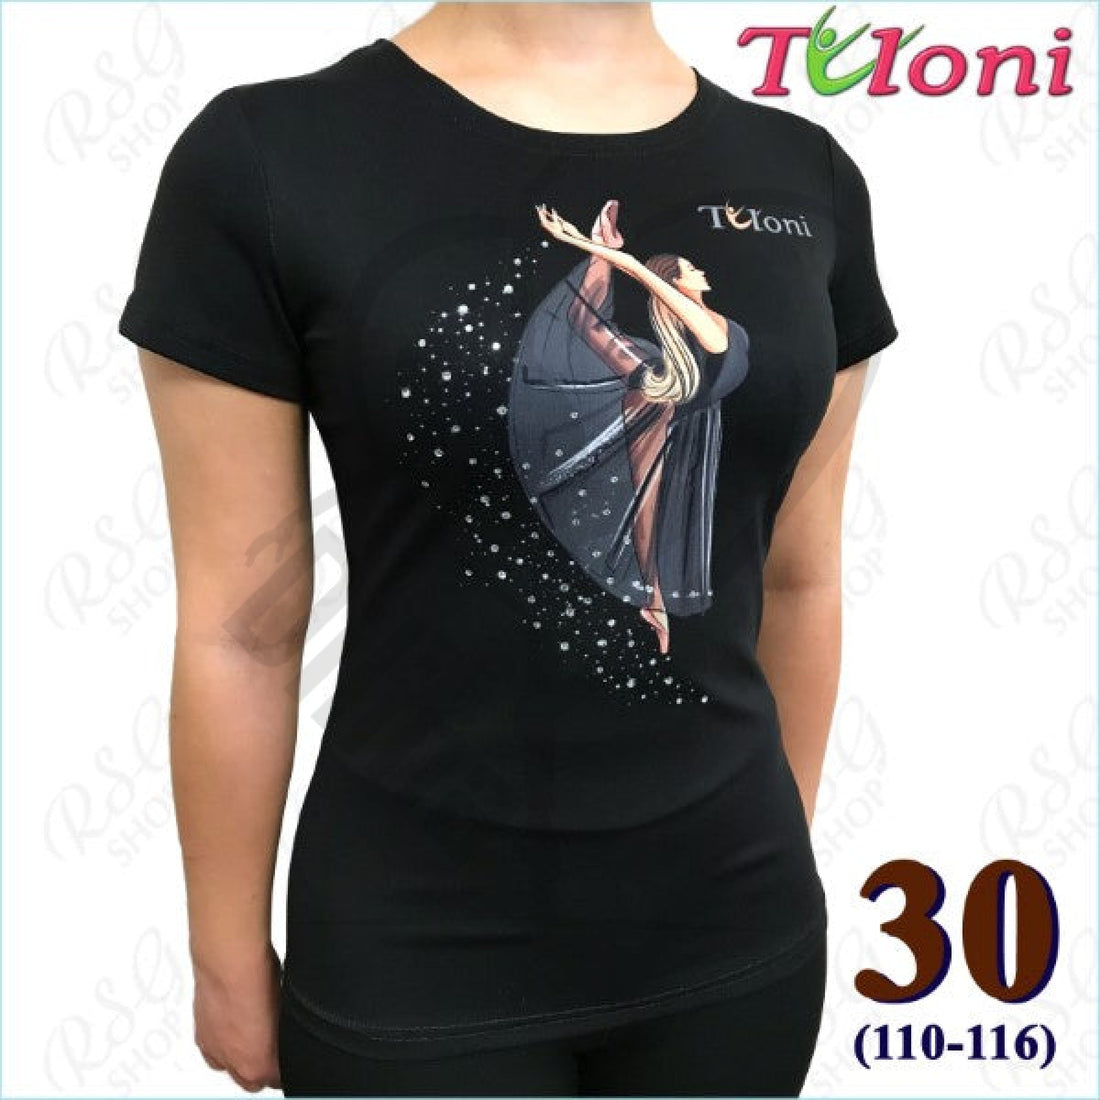 Tuloni Black T-Shirt Mod. Ballet 30 (110-116) T Shirts & Tops